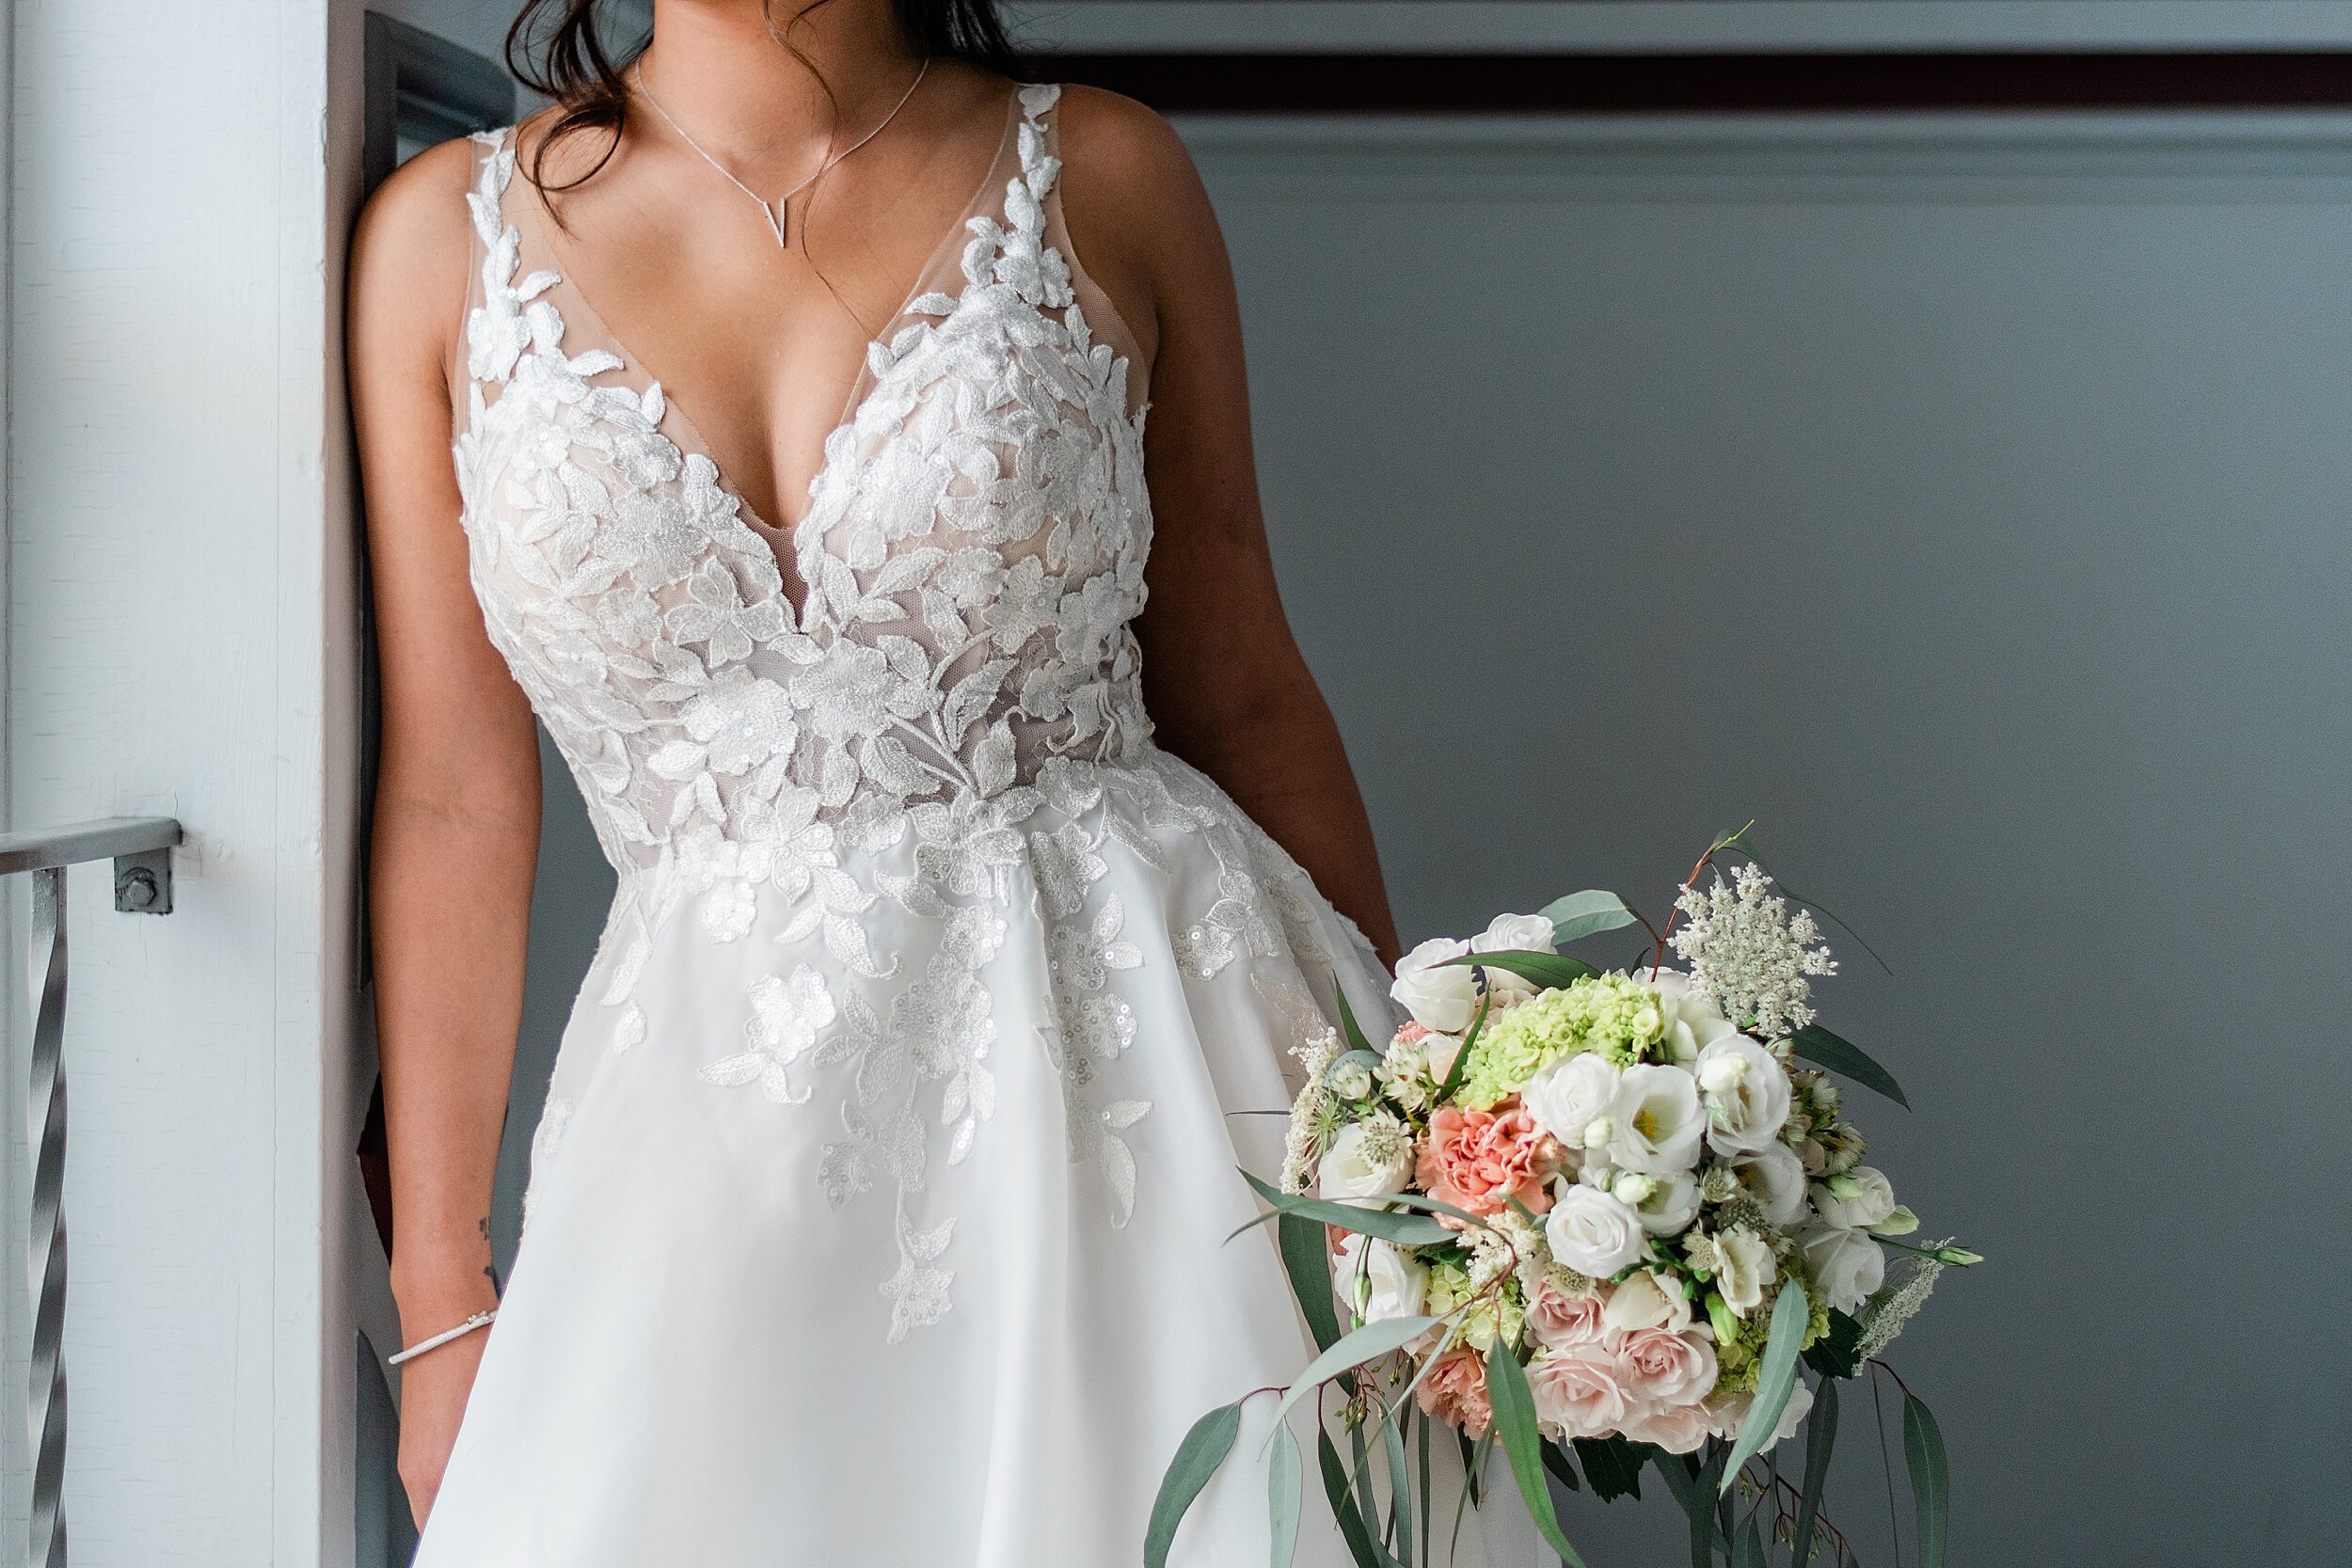 sisters-bridal-boutique-laudicks-jewelry-betsys-bouquets-van-wert-ohio-wedding-photographer-the-association-photography_6881.jpg